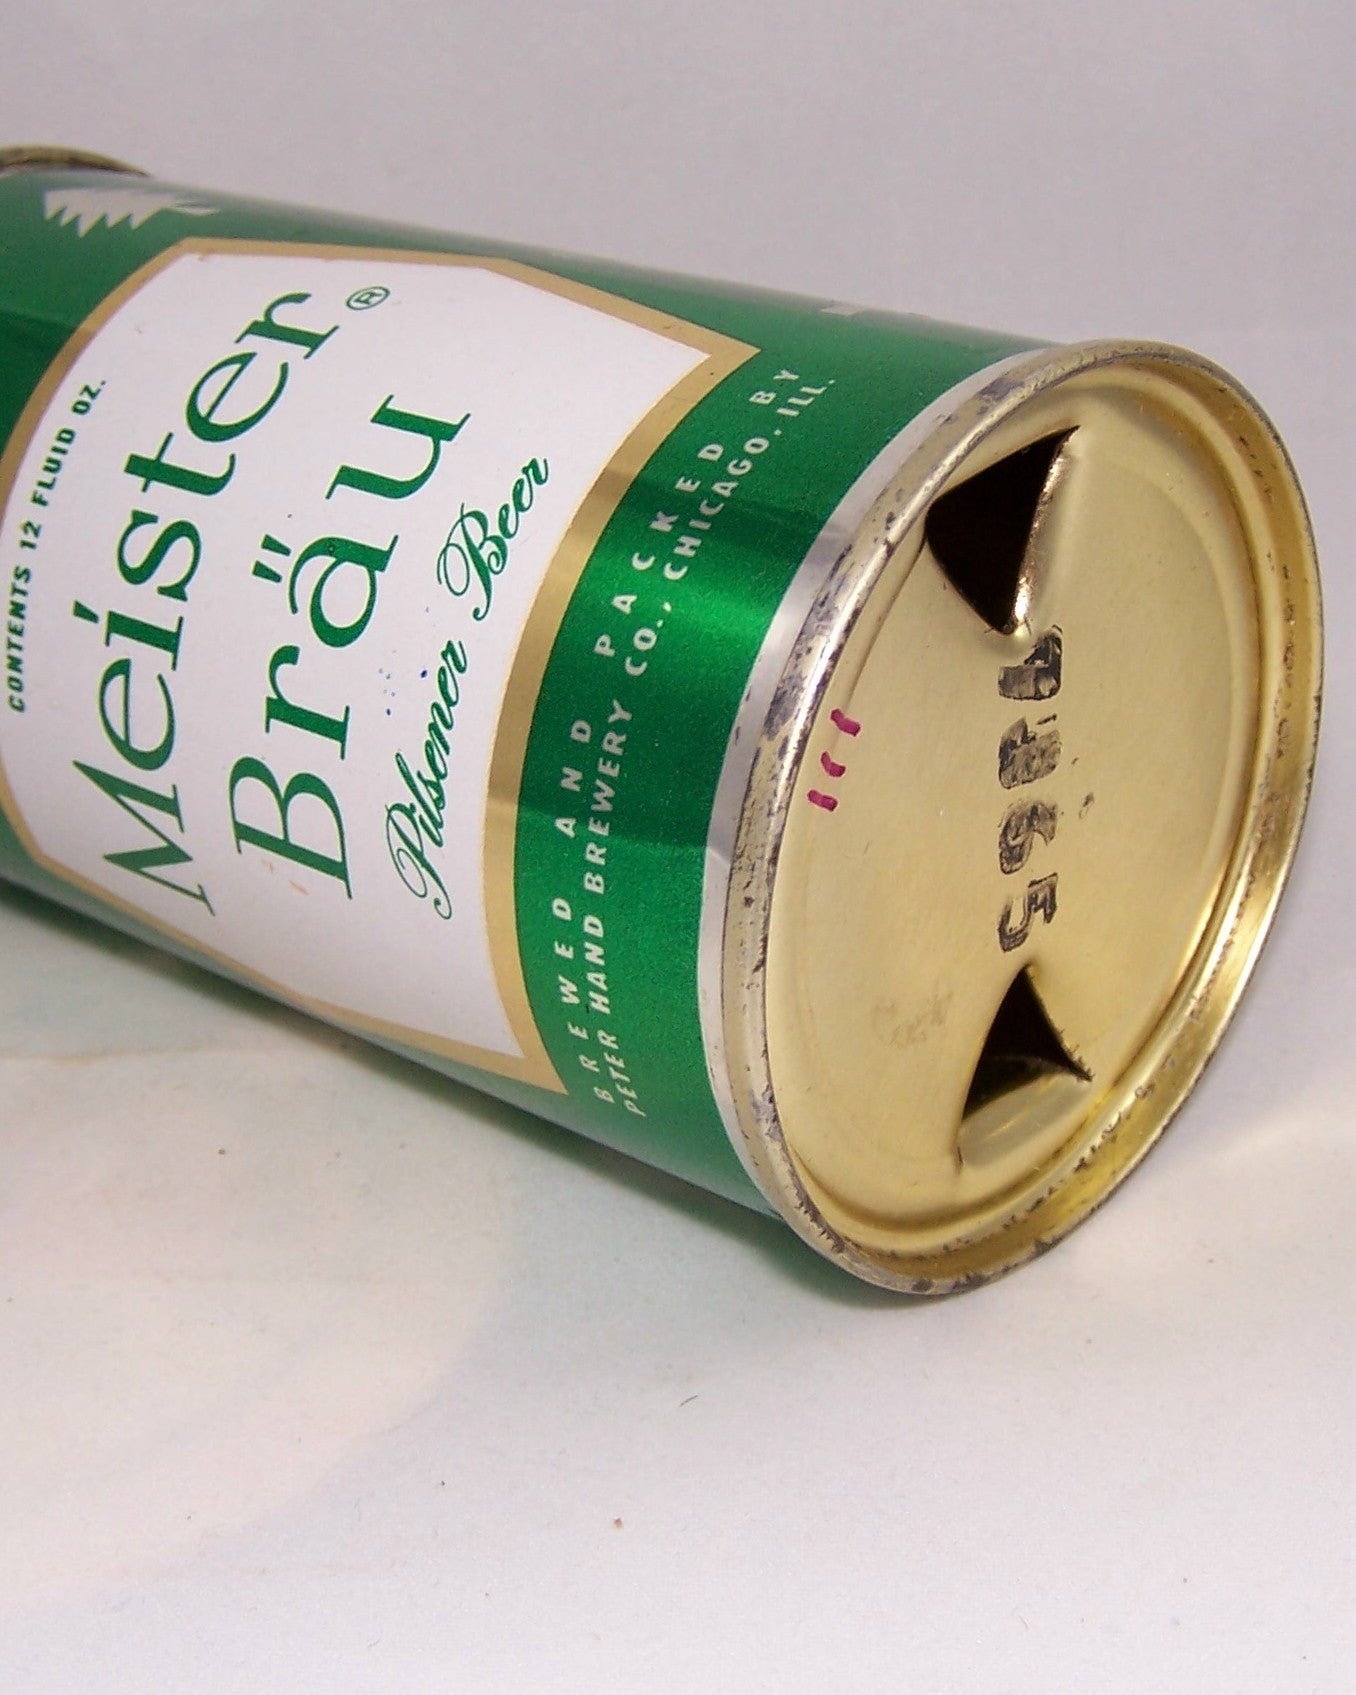 Meister Brau (Sports) Pilsener Beer (Metallic) USBC 95-38, Grade 1/1+ Sold on 9/28/15